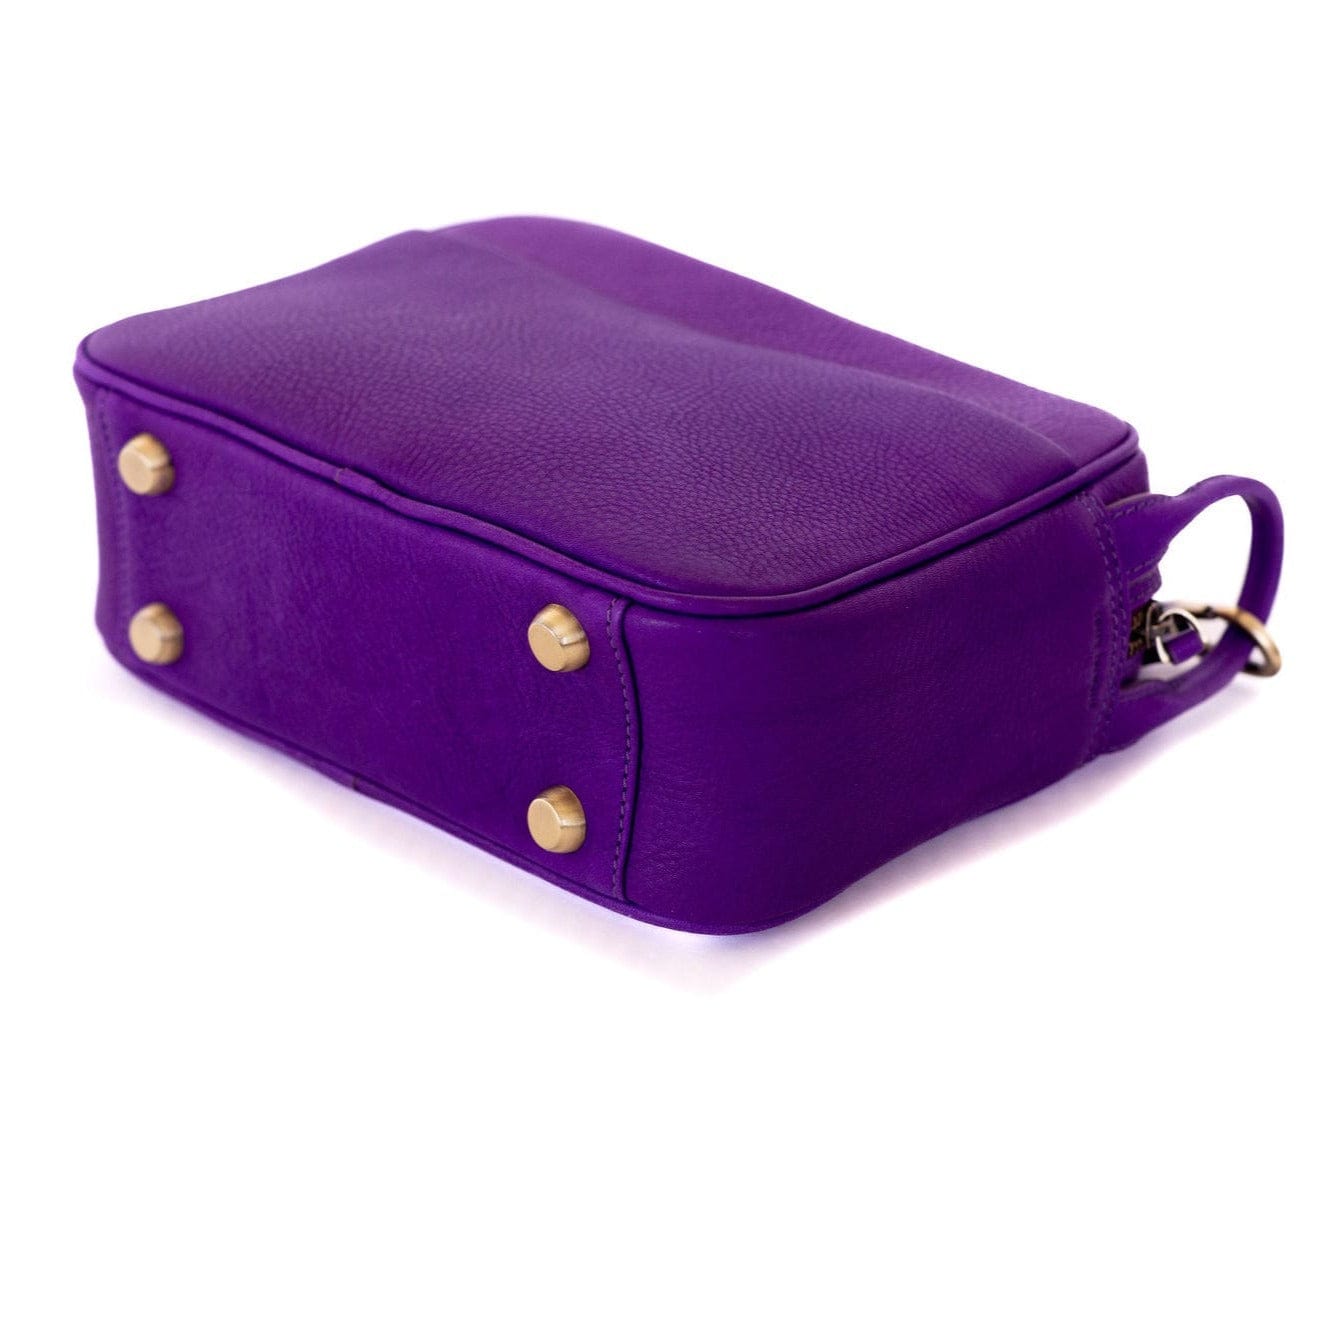 Glod JORLEE Stylish Chain Satchel Handbags for Women - Luxury Snake-Printed Leather Shoulder Crossbody Bag Evening Clutch Tote Purse (Blue-Violet)